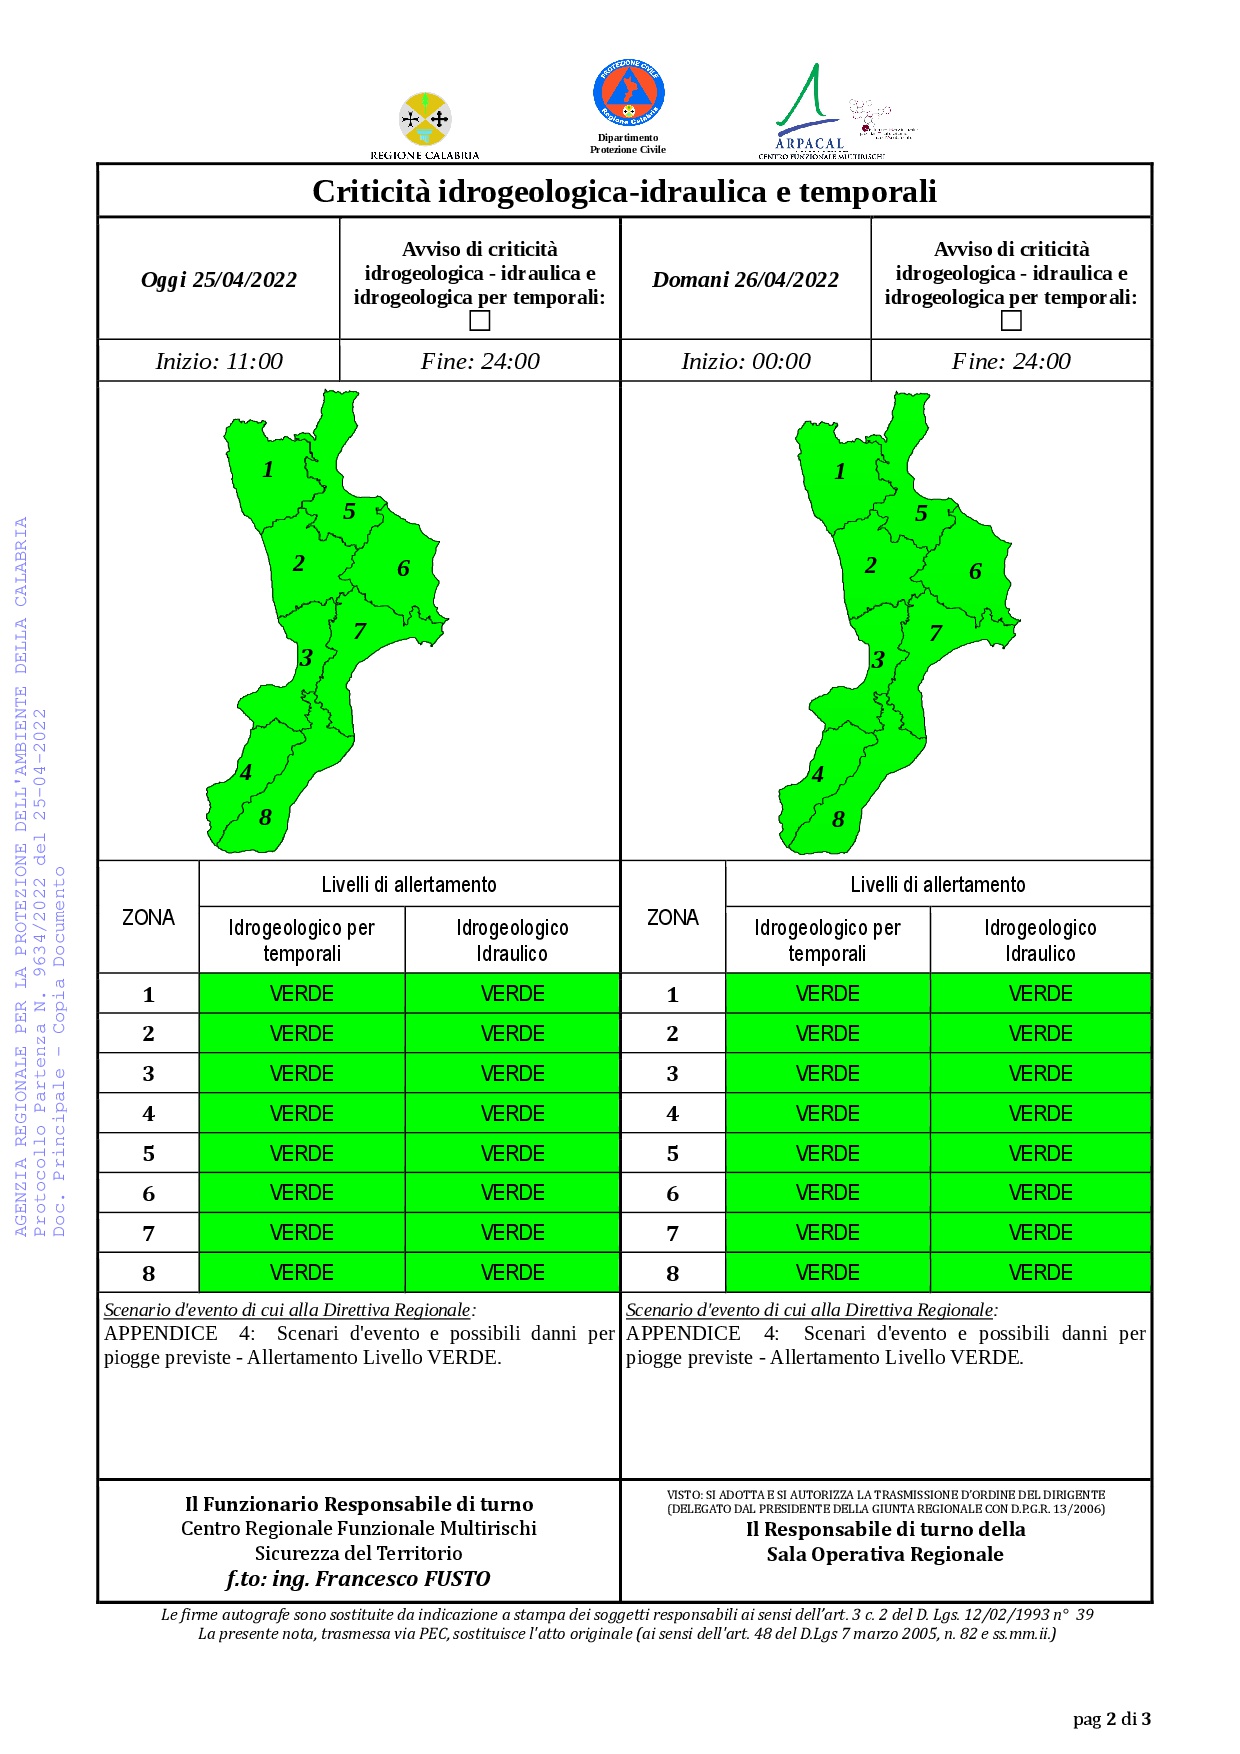 Criticità idrogeologica-idraulica e temporali in Calabria 25-04-2022